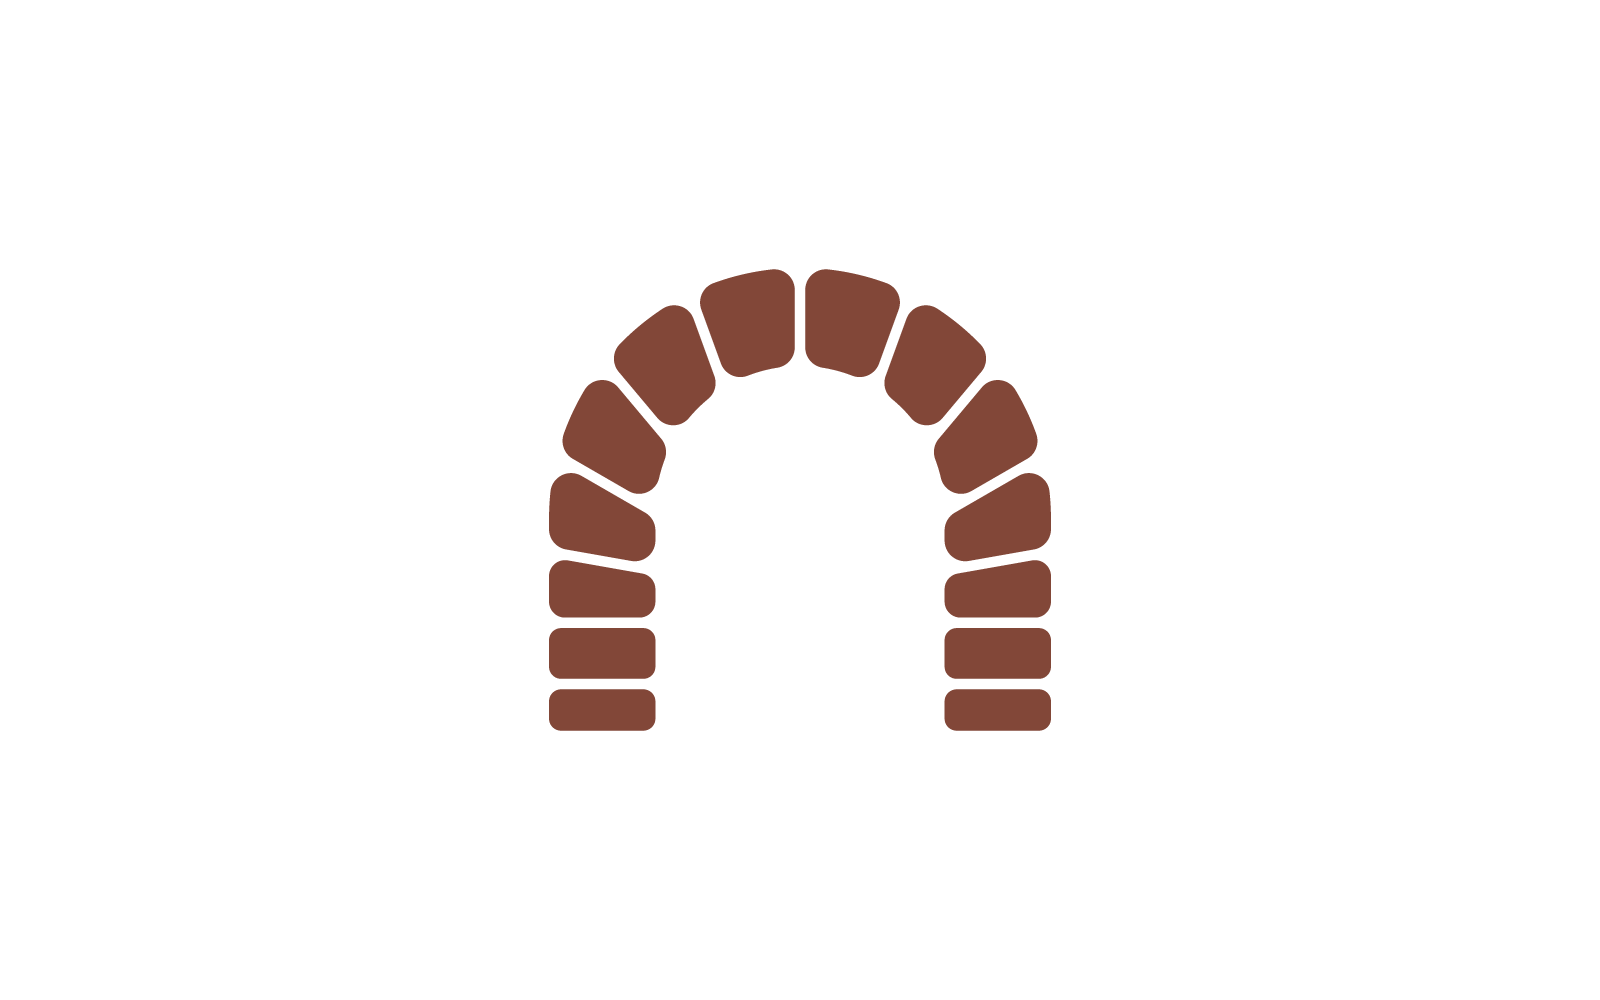 Brick bridge vector logo ilustration design